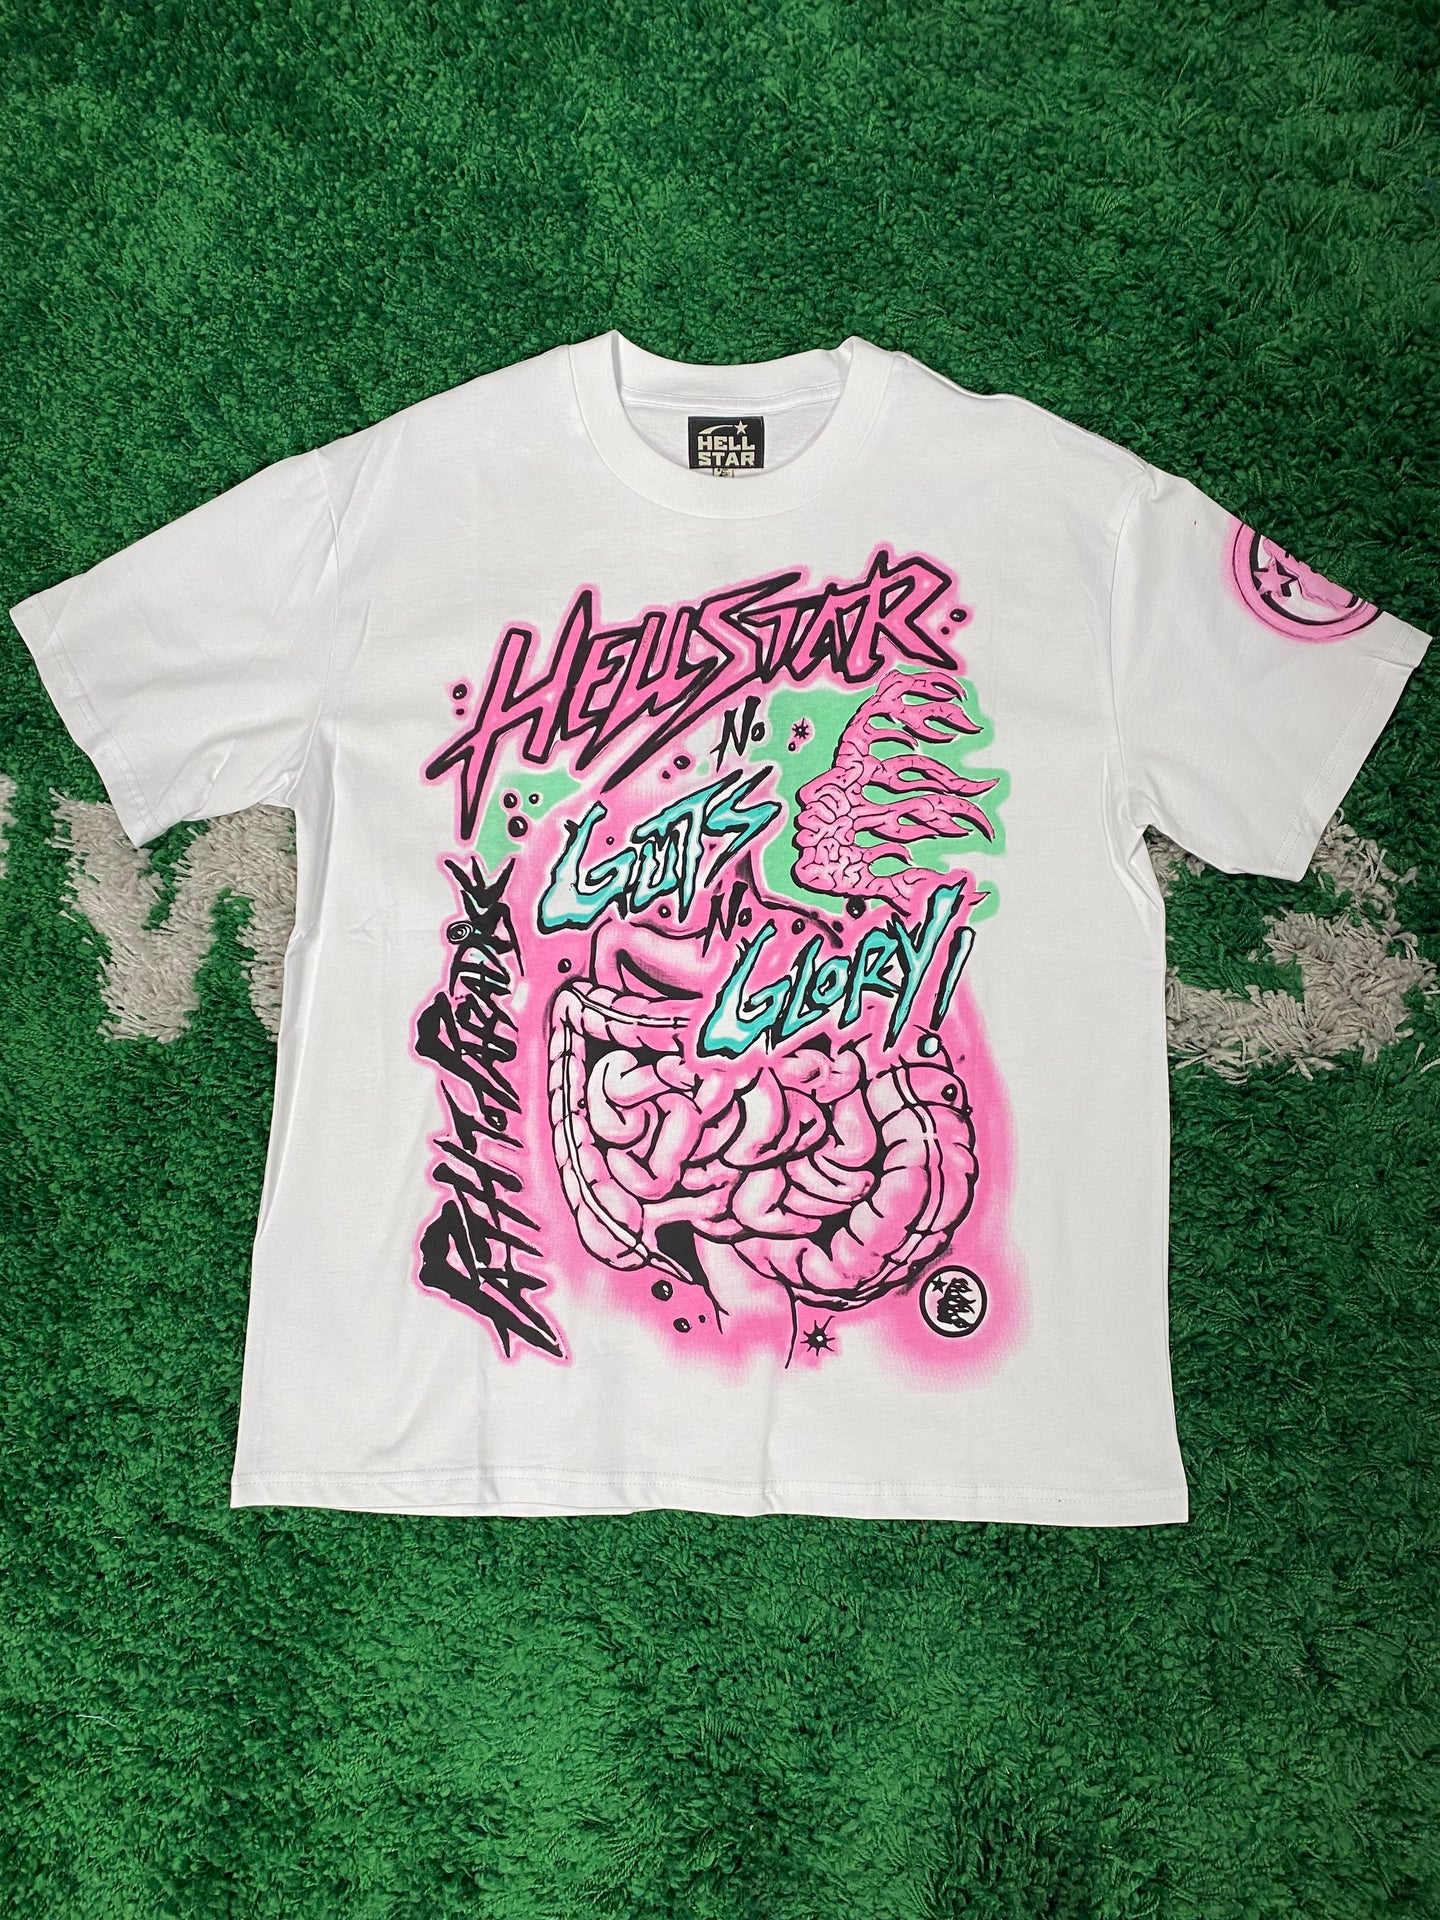 Hellstar ‘No Guts No Glory’ Shirt - White/Pink/Green